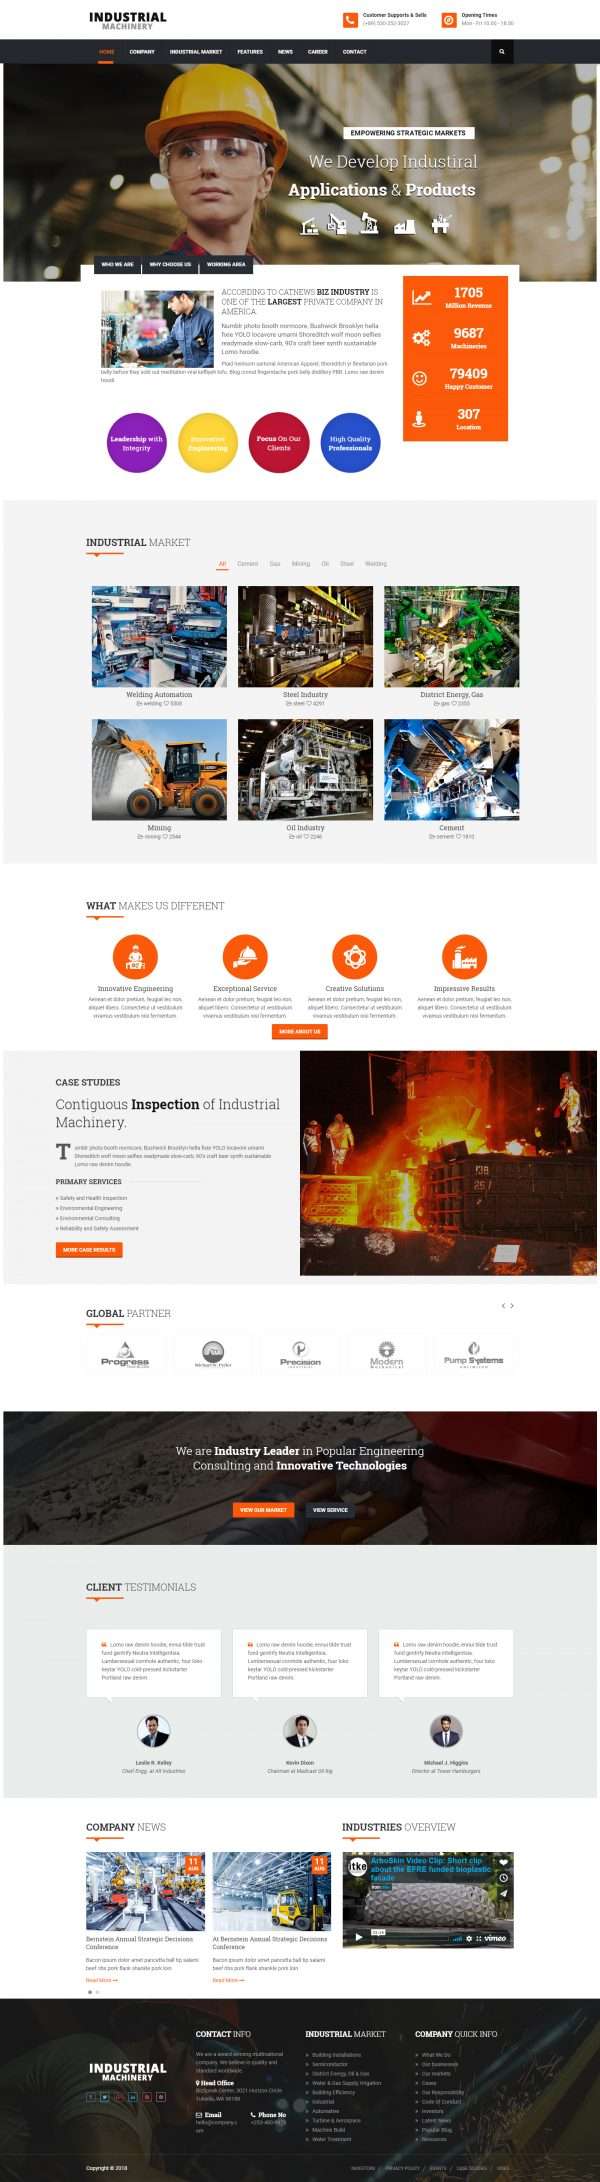 Industrial Machinery website template